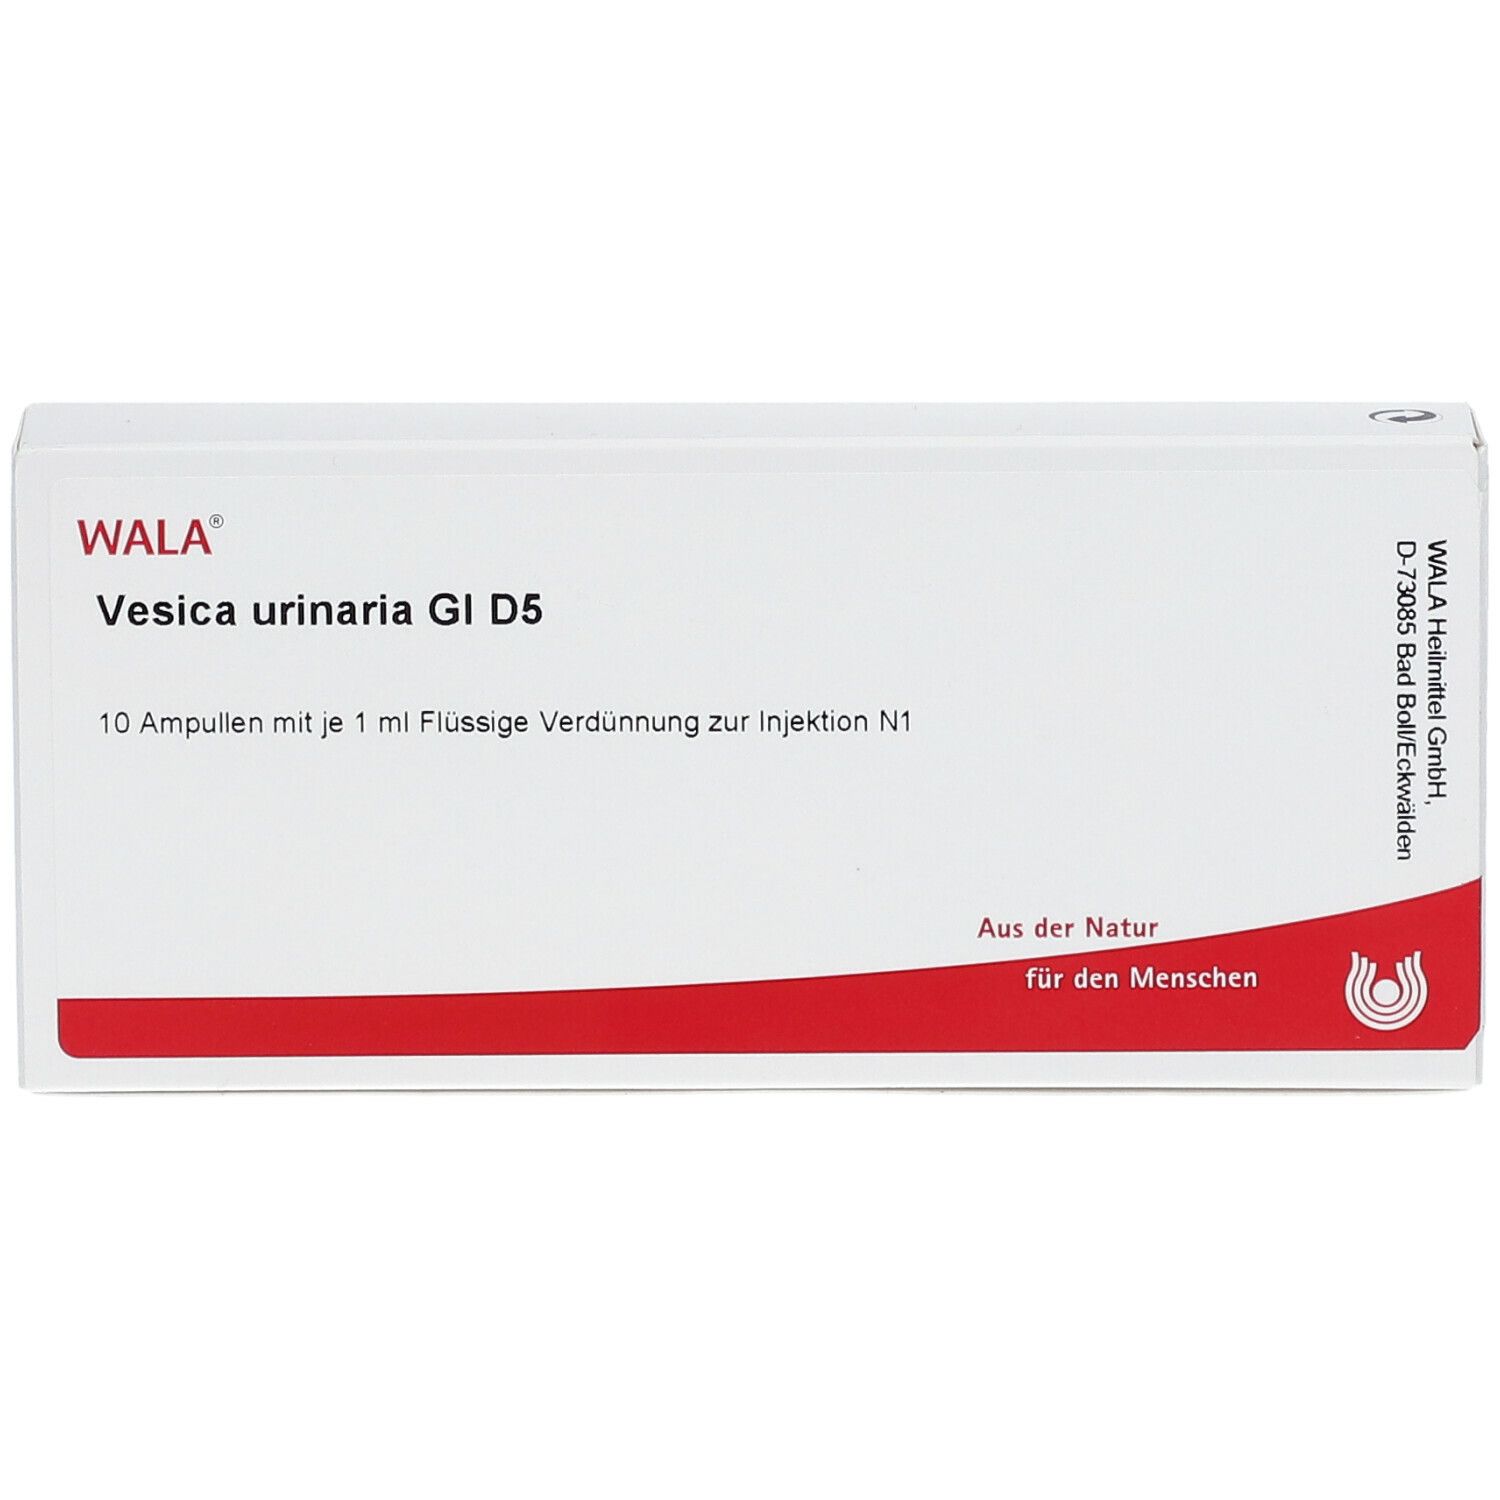 WALA® Vesica urinaria Gl D 5